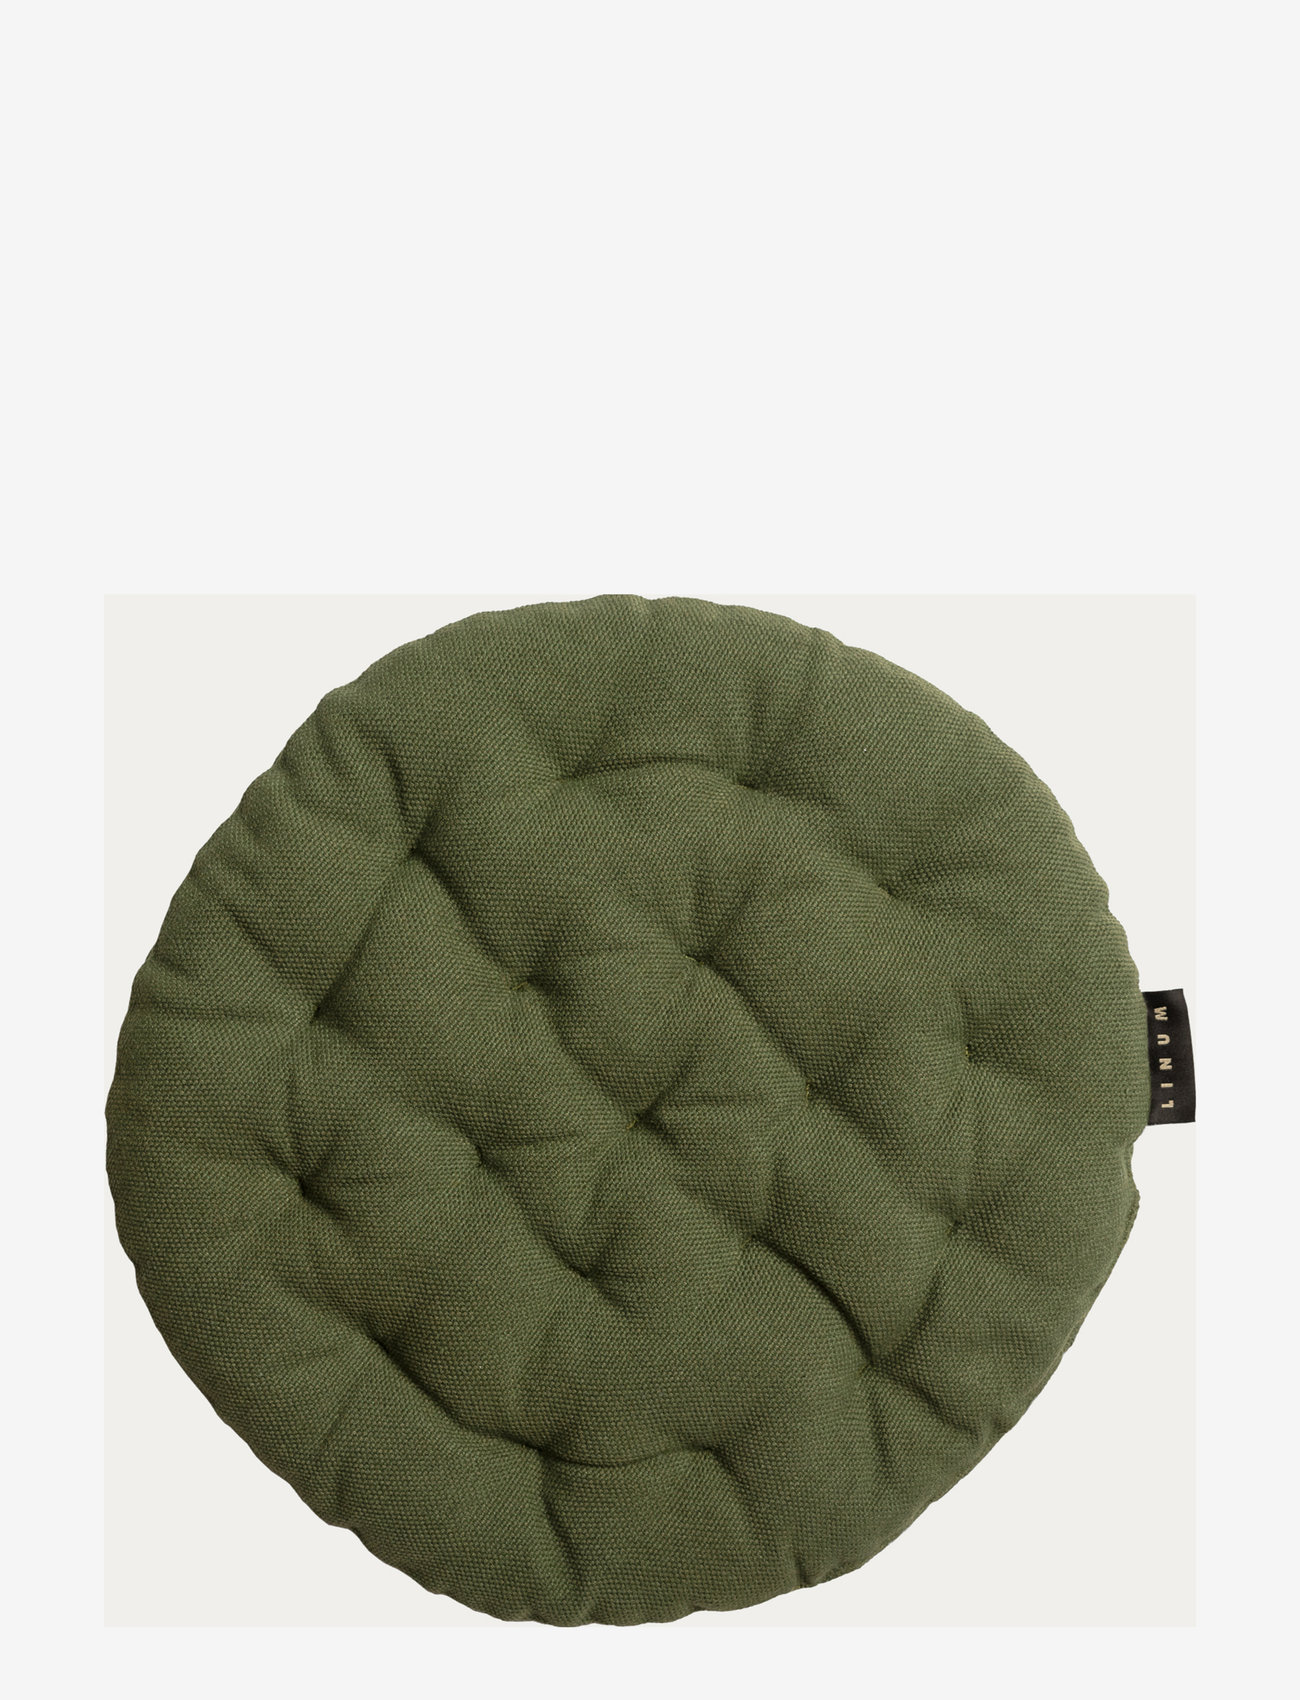 LINUM - PEPPER SEAT CUSHION - laveste priser - dark olive green - 0